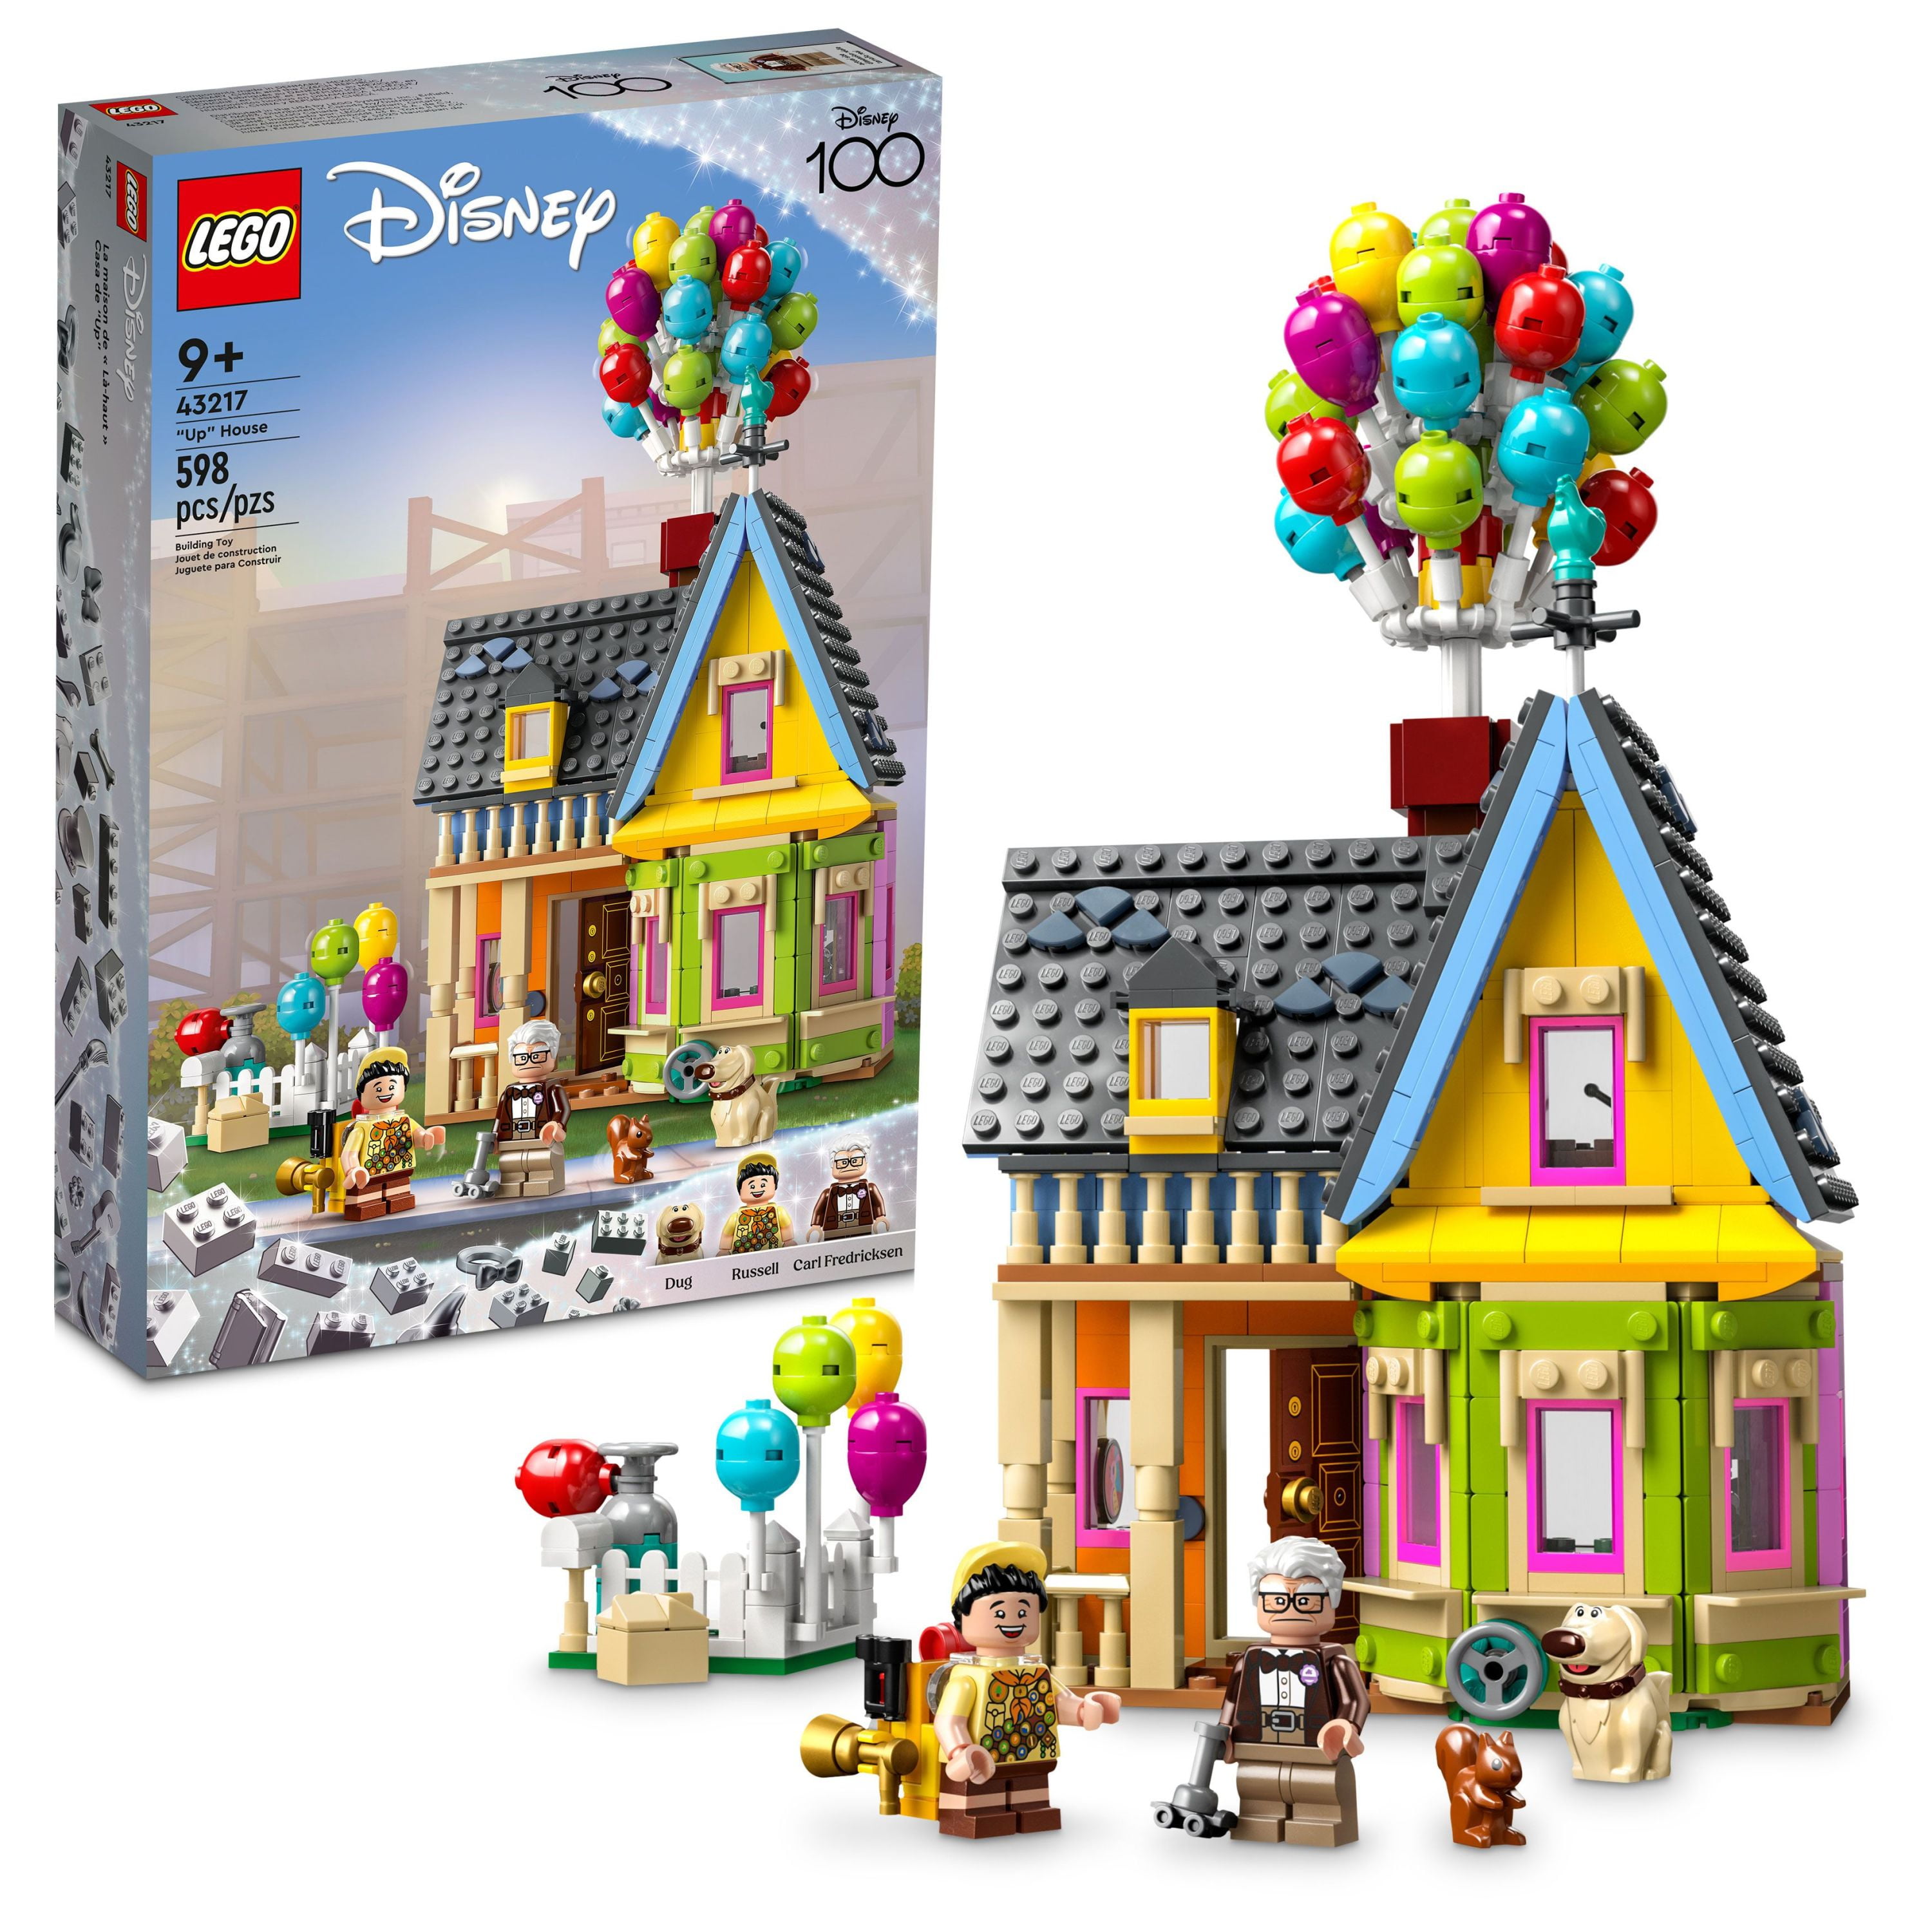 LEGO Disney and Pixar 'Up' House 43217 Disney 100 Celebration